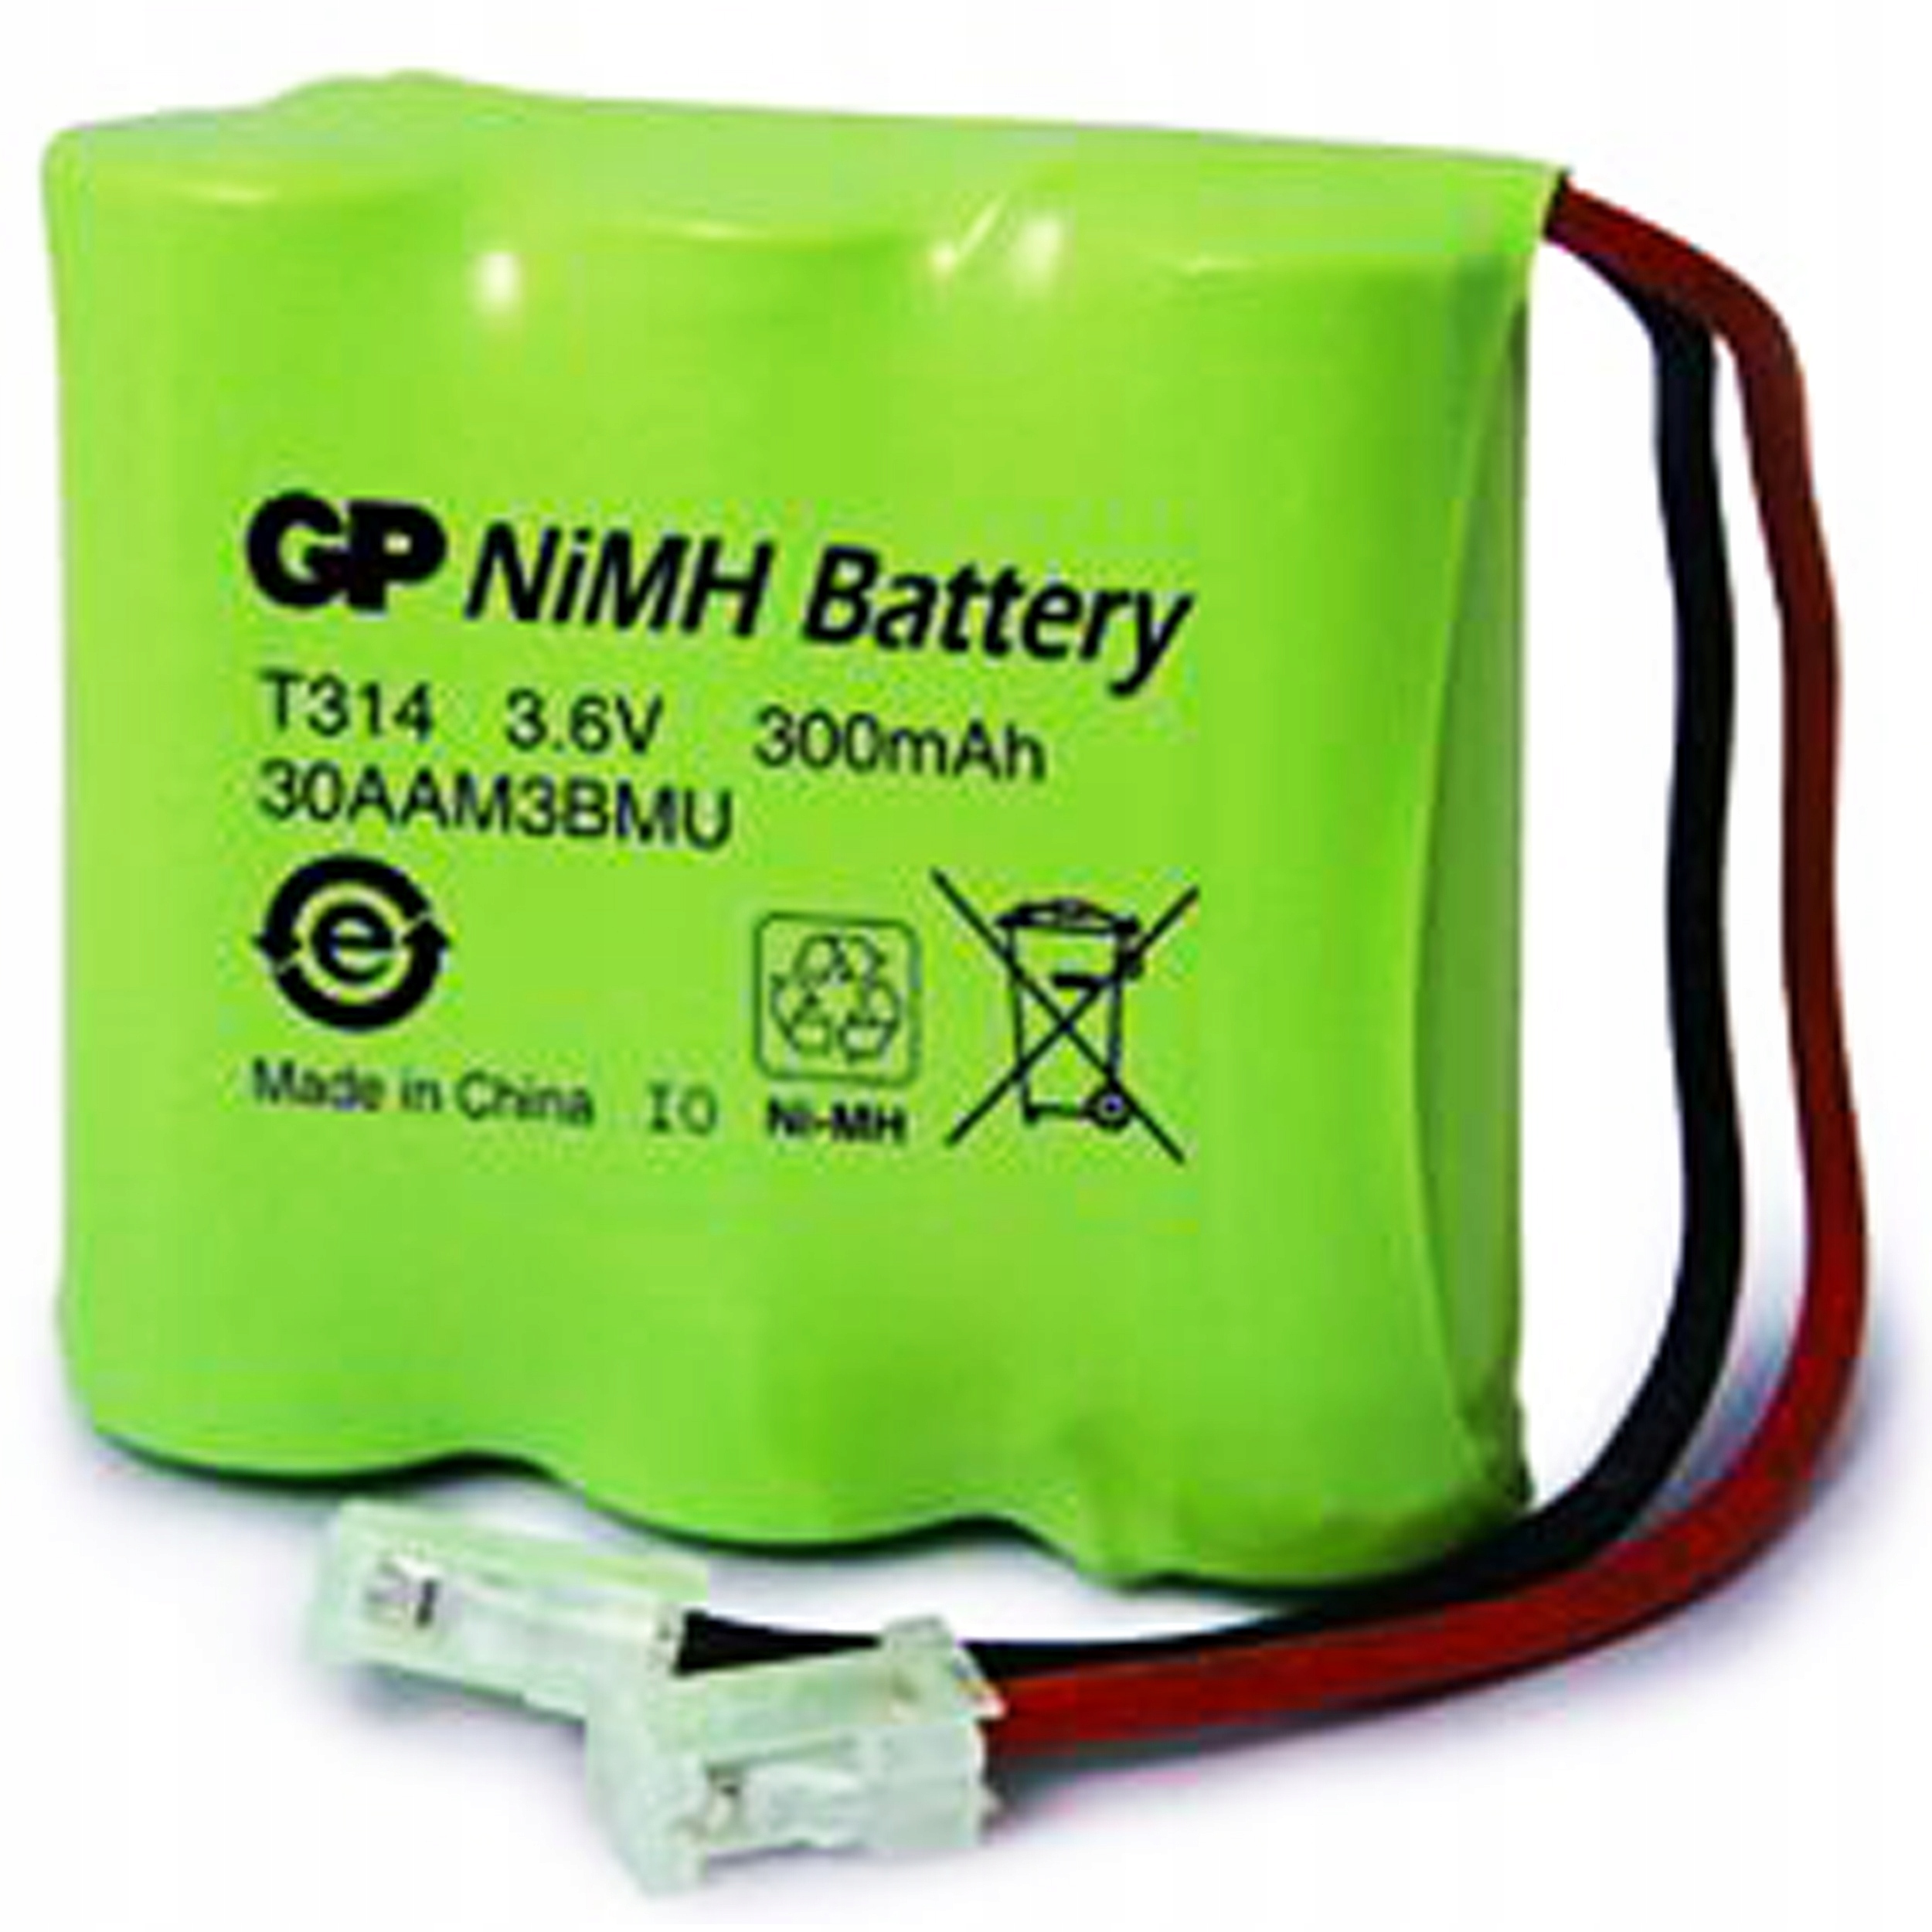 Nimh battery. Аккумулятор ni-MH 3.6V 300mah для ru 21816ge4-a. Аккумулятор t314. GP батарейки 6v для СТВС. GP ni CD Battery 3.6v 300mah.